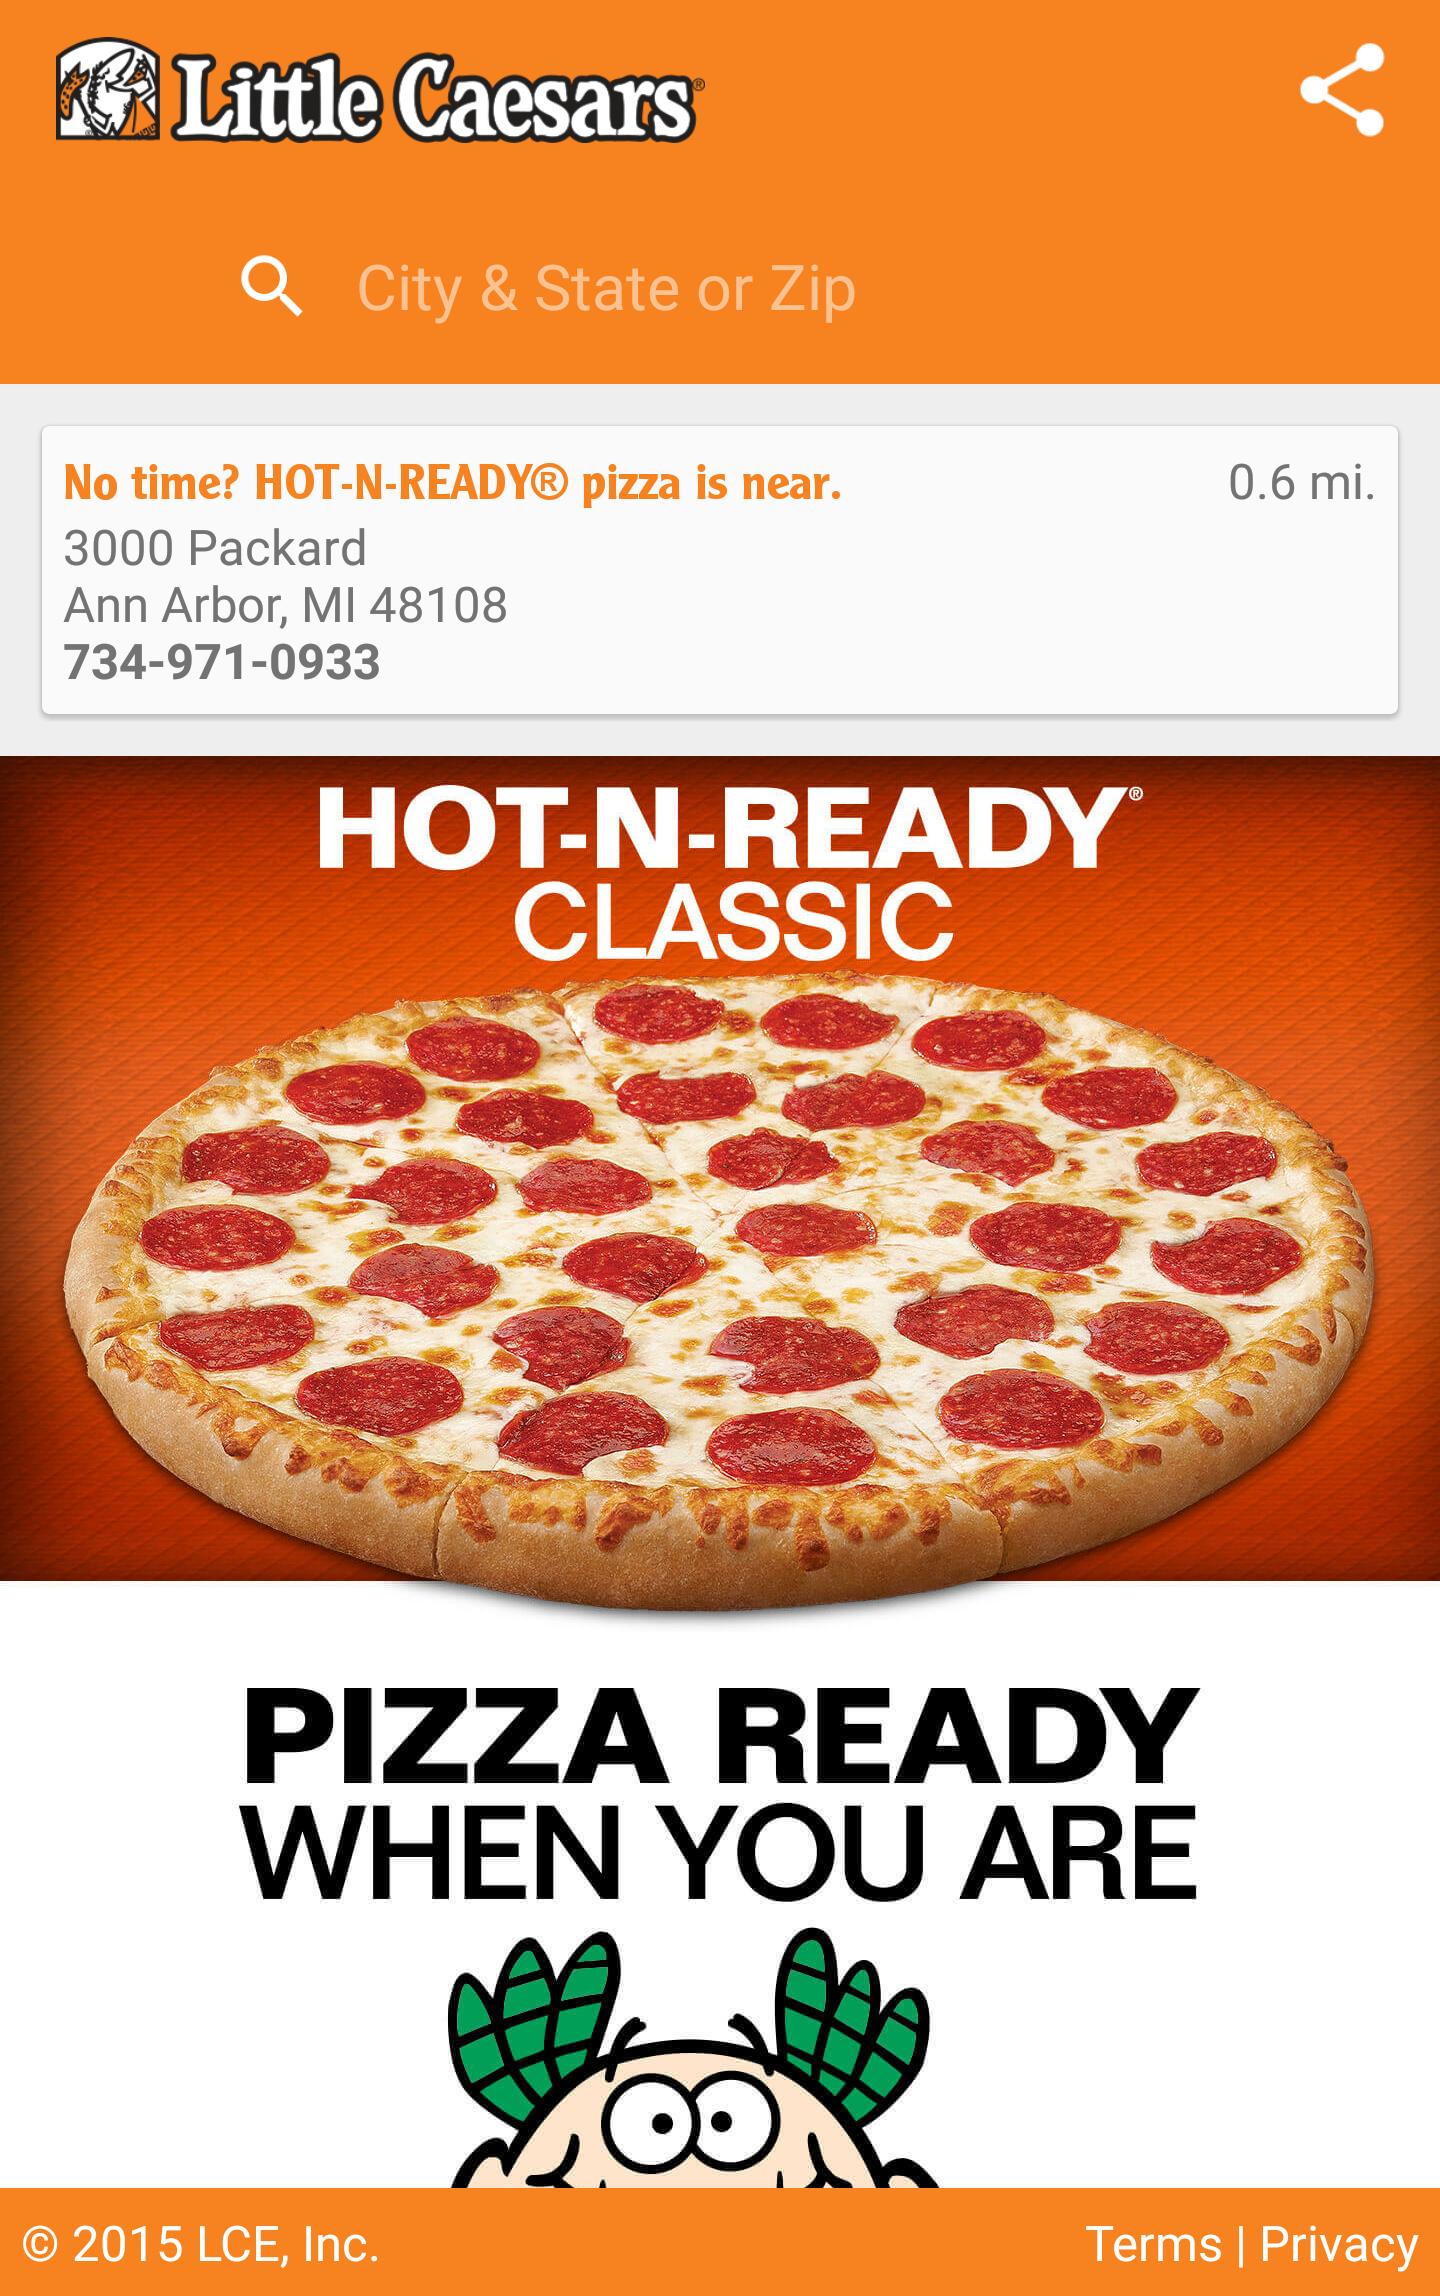 Pizza ready бесплатные покупки. Little Caesars. Реклама little Caesars. Little Caesars pizza. Hot n ready пицца коробка.